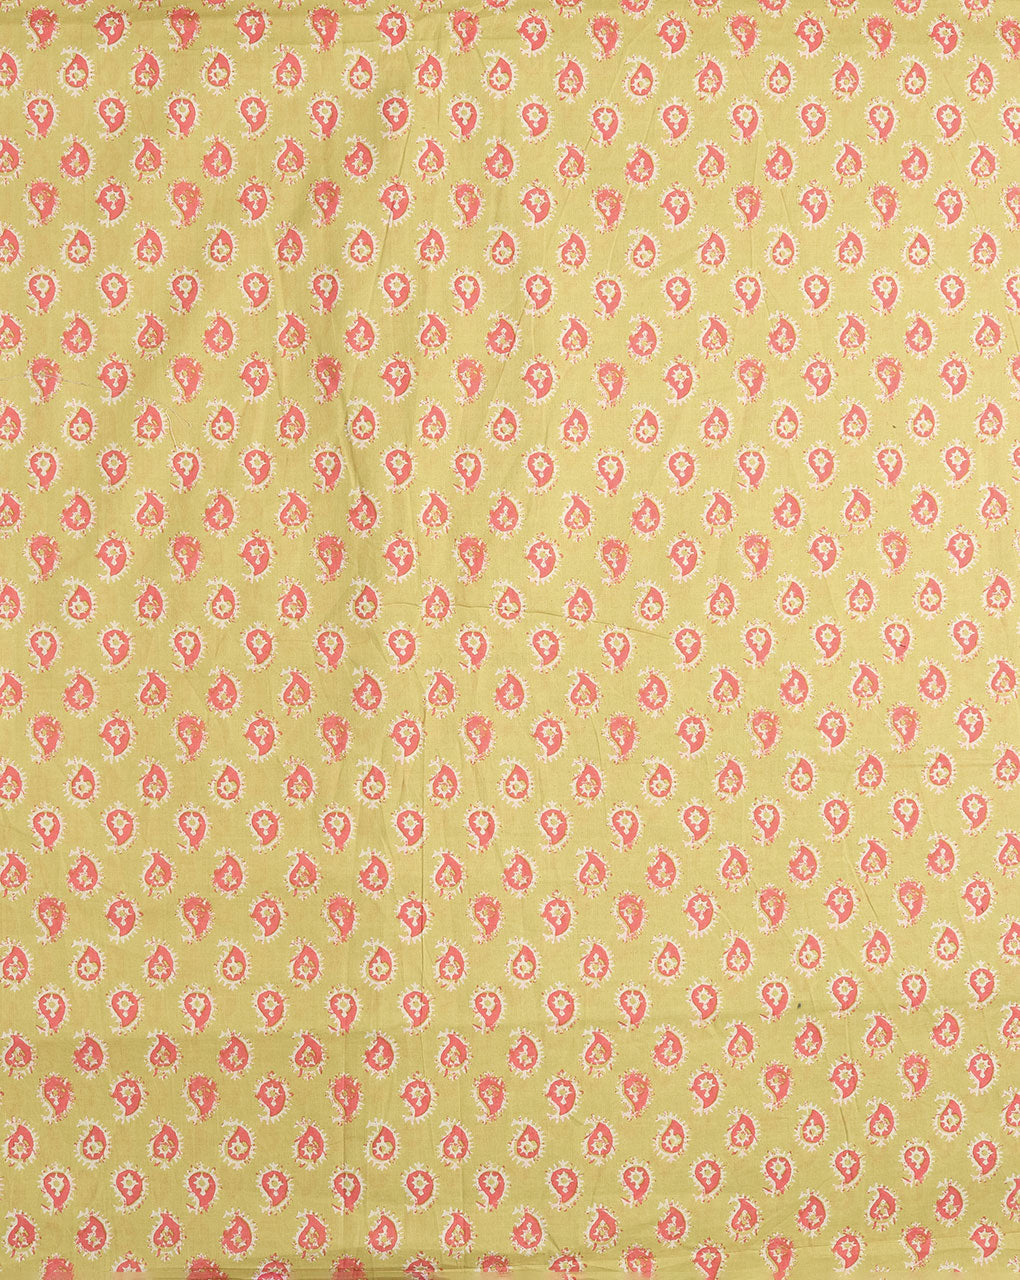 Paisley Screen Print Cotton Fabric - Fabriclore.com